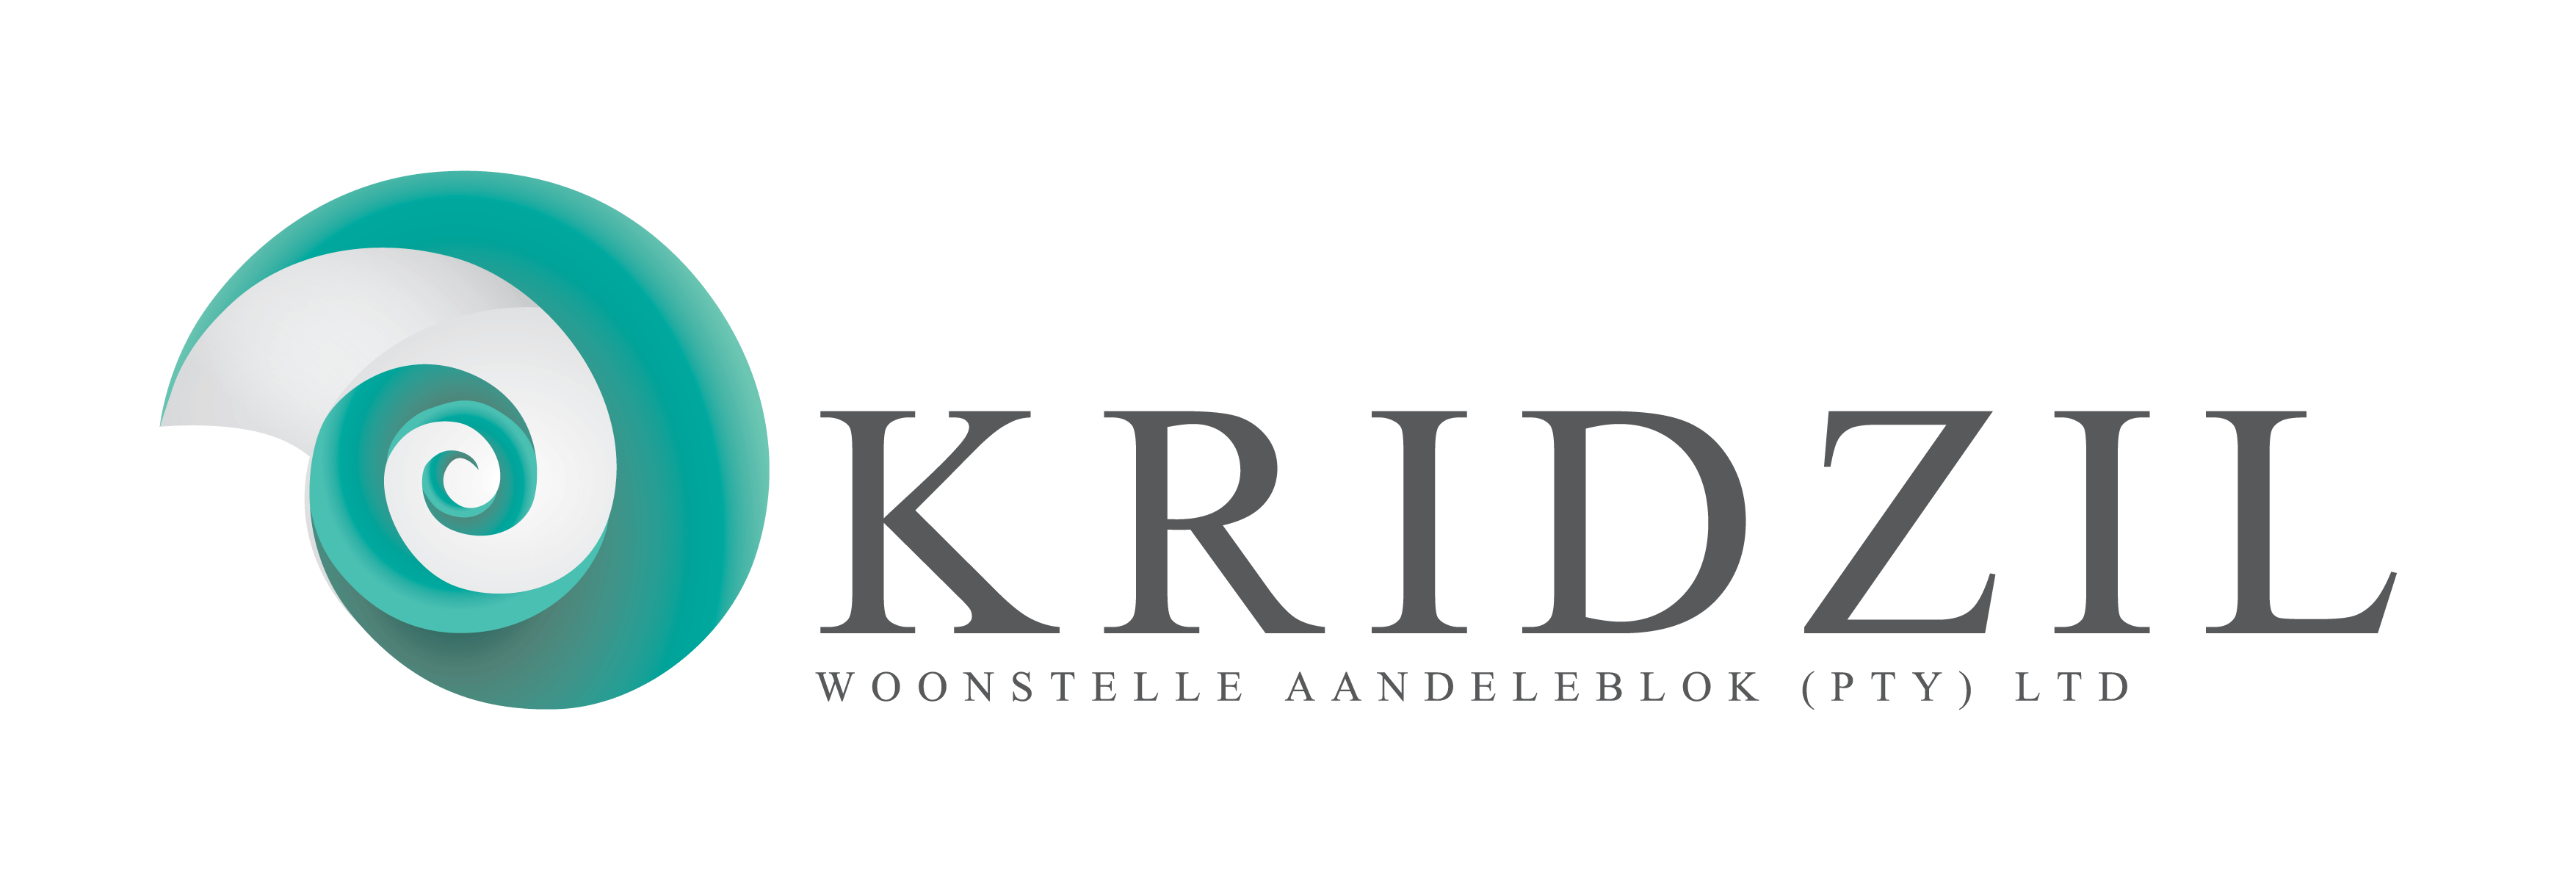 Kridzil Logo